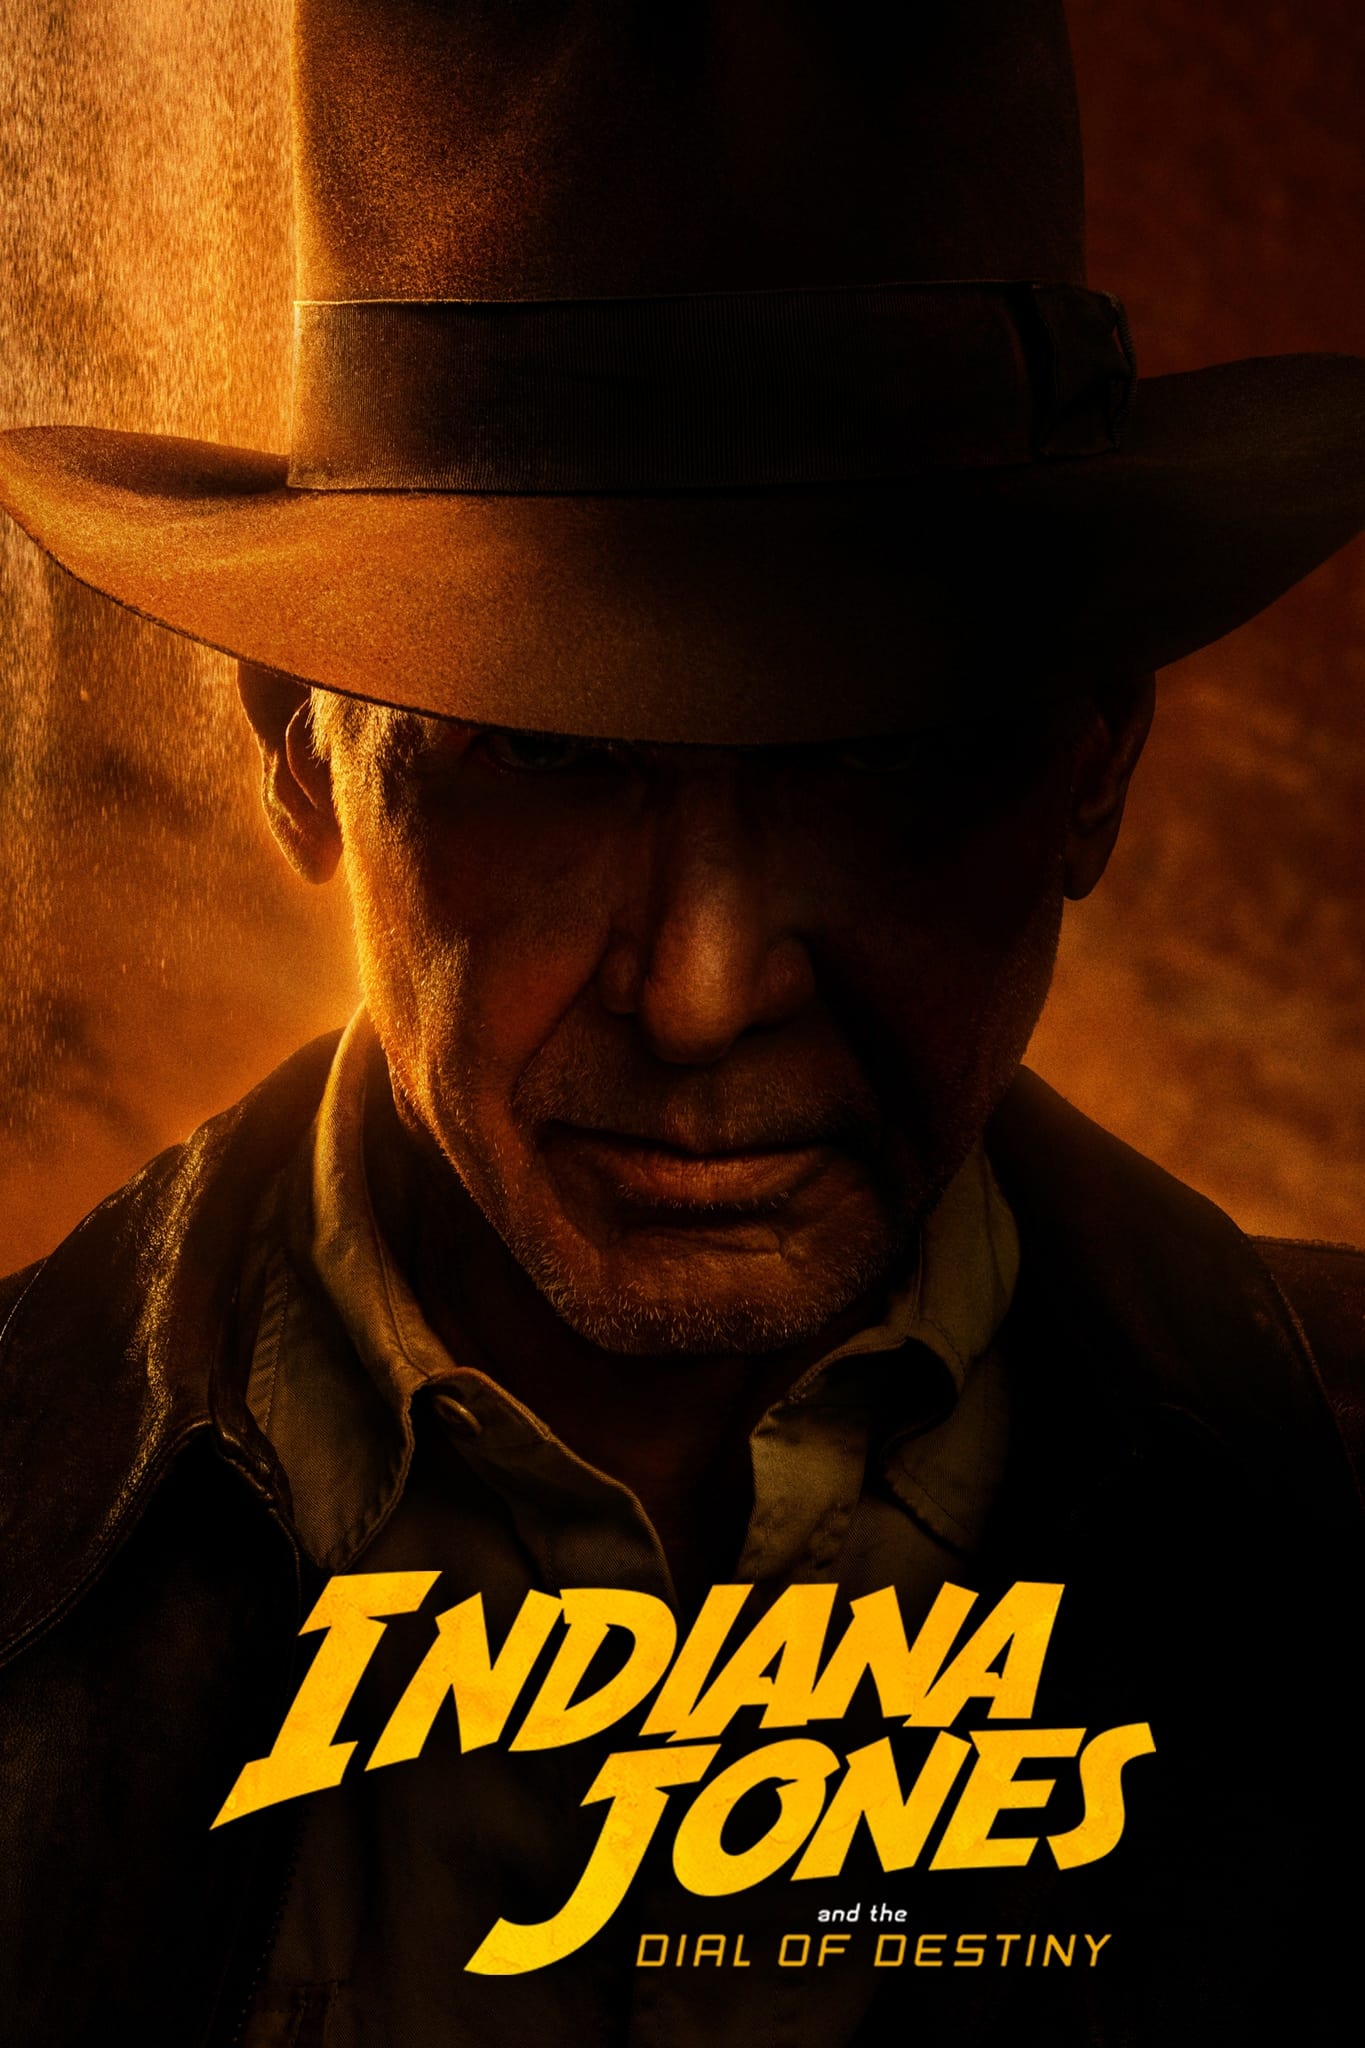 Steven Spielberg Shows Love For Indiana Jones 5